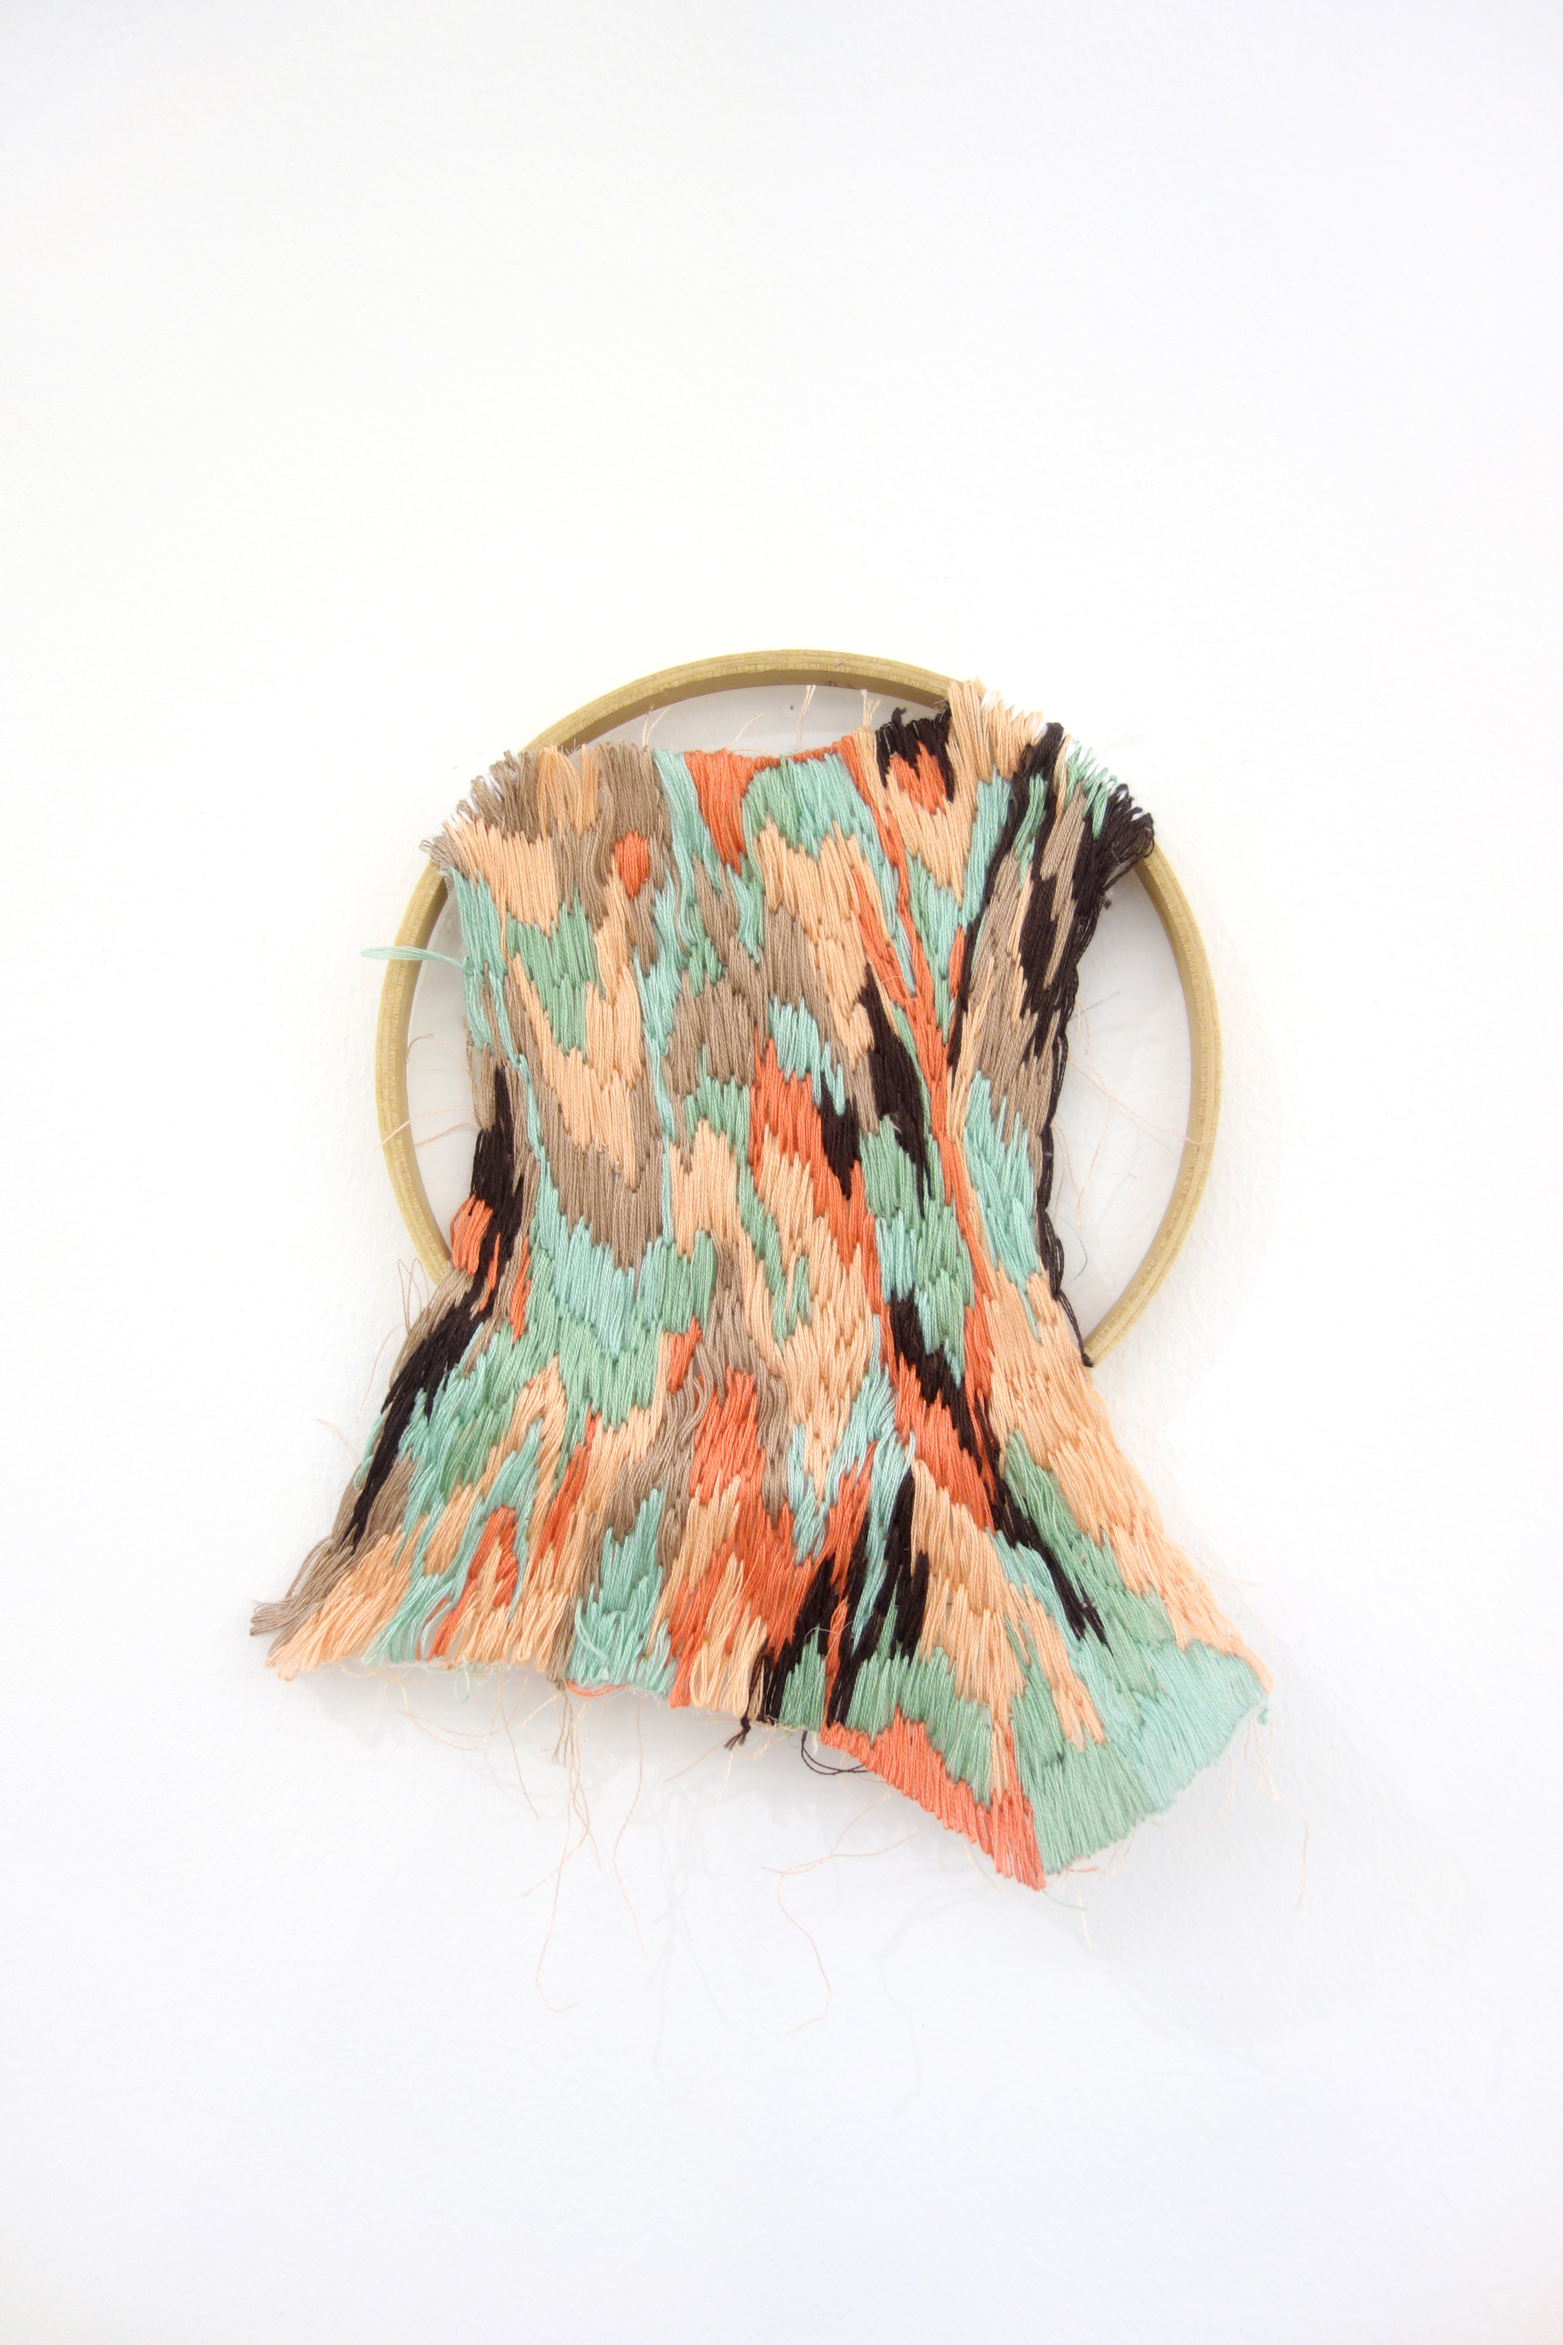  Izziyana Suhaimi  Cross Section of Bone III  2015 Cotton thread embroided on organza on wooden hoop H23 x W16 cm 